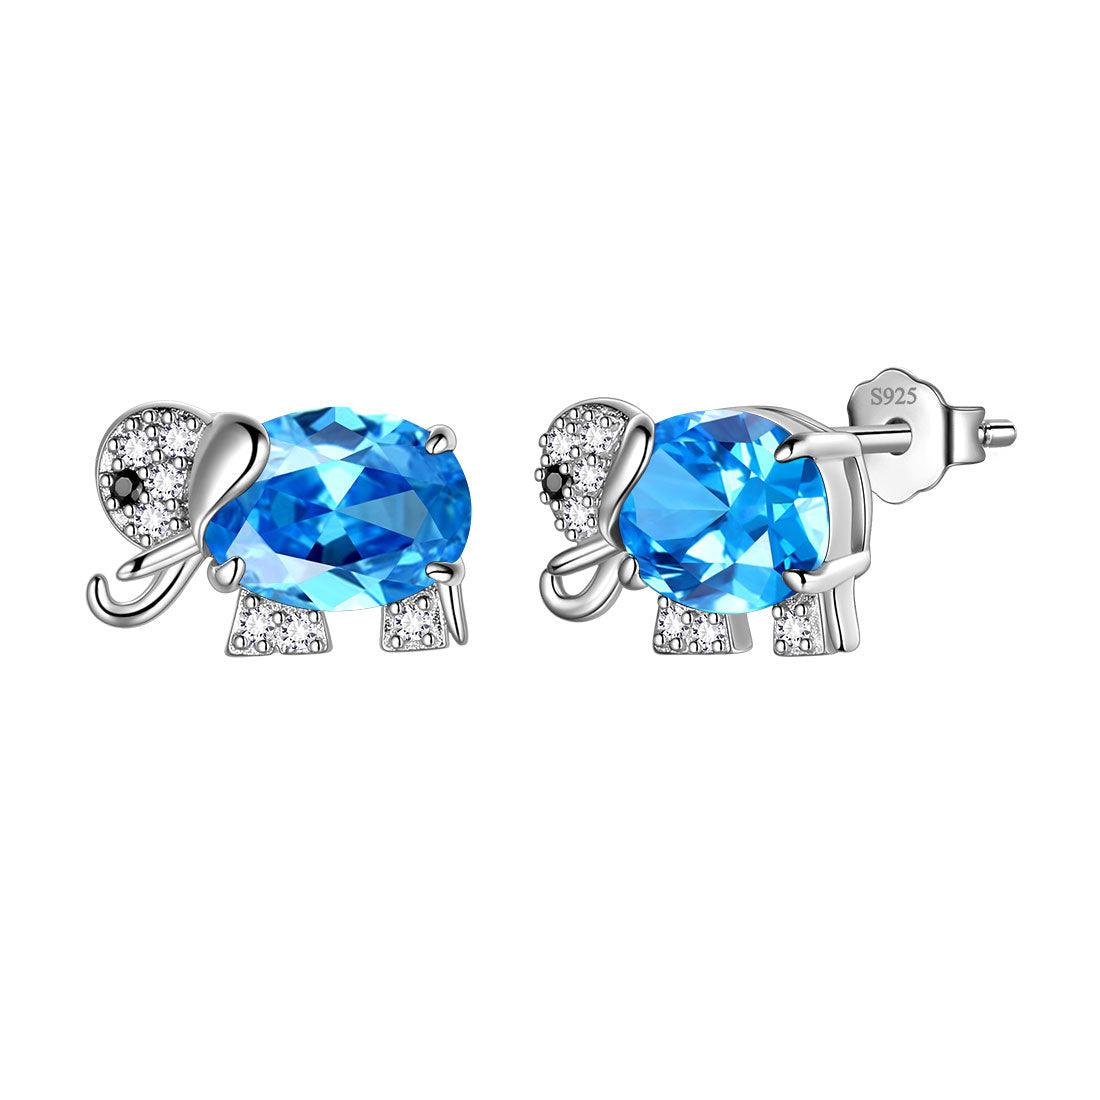 Elephant Birthstone March Aquamarine Earrings - Earrings - Aurora Tears